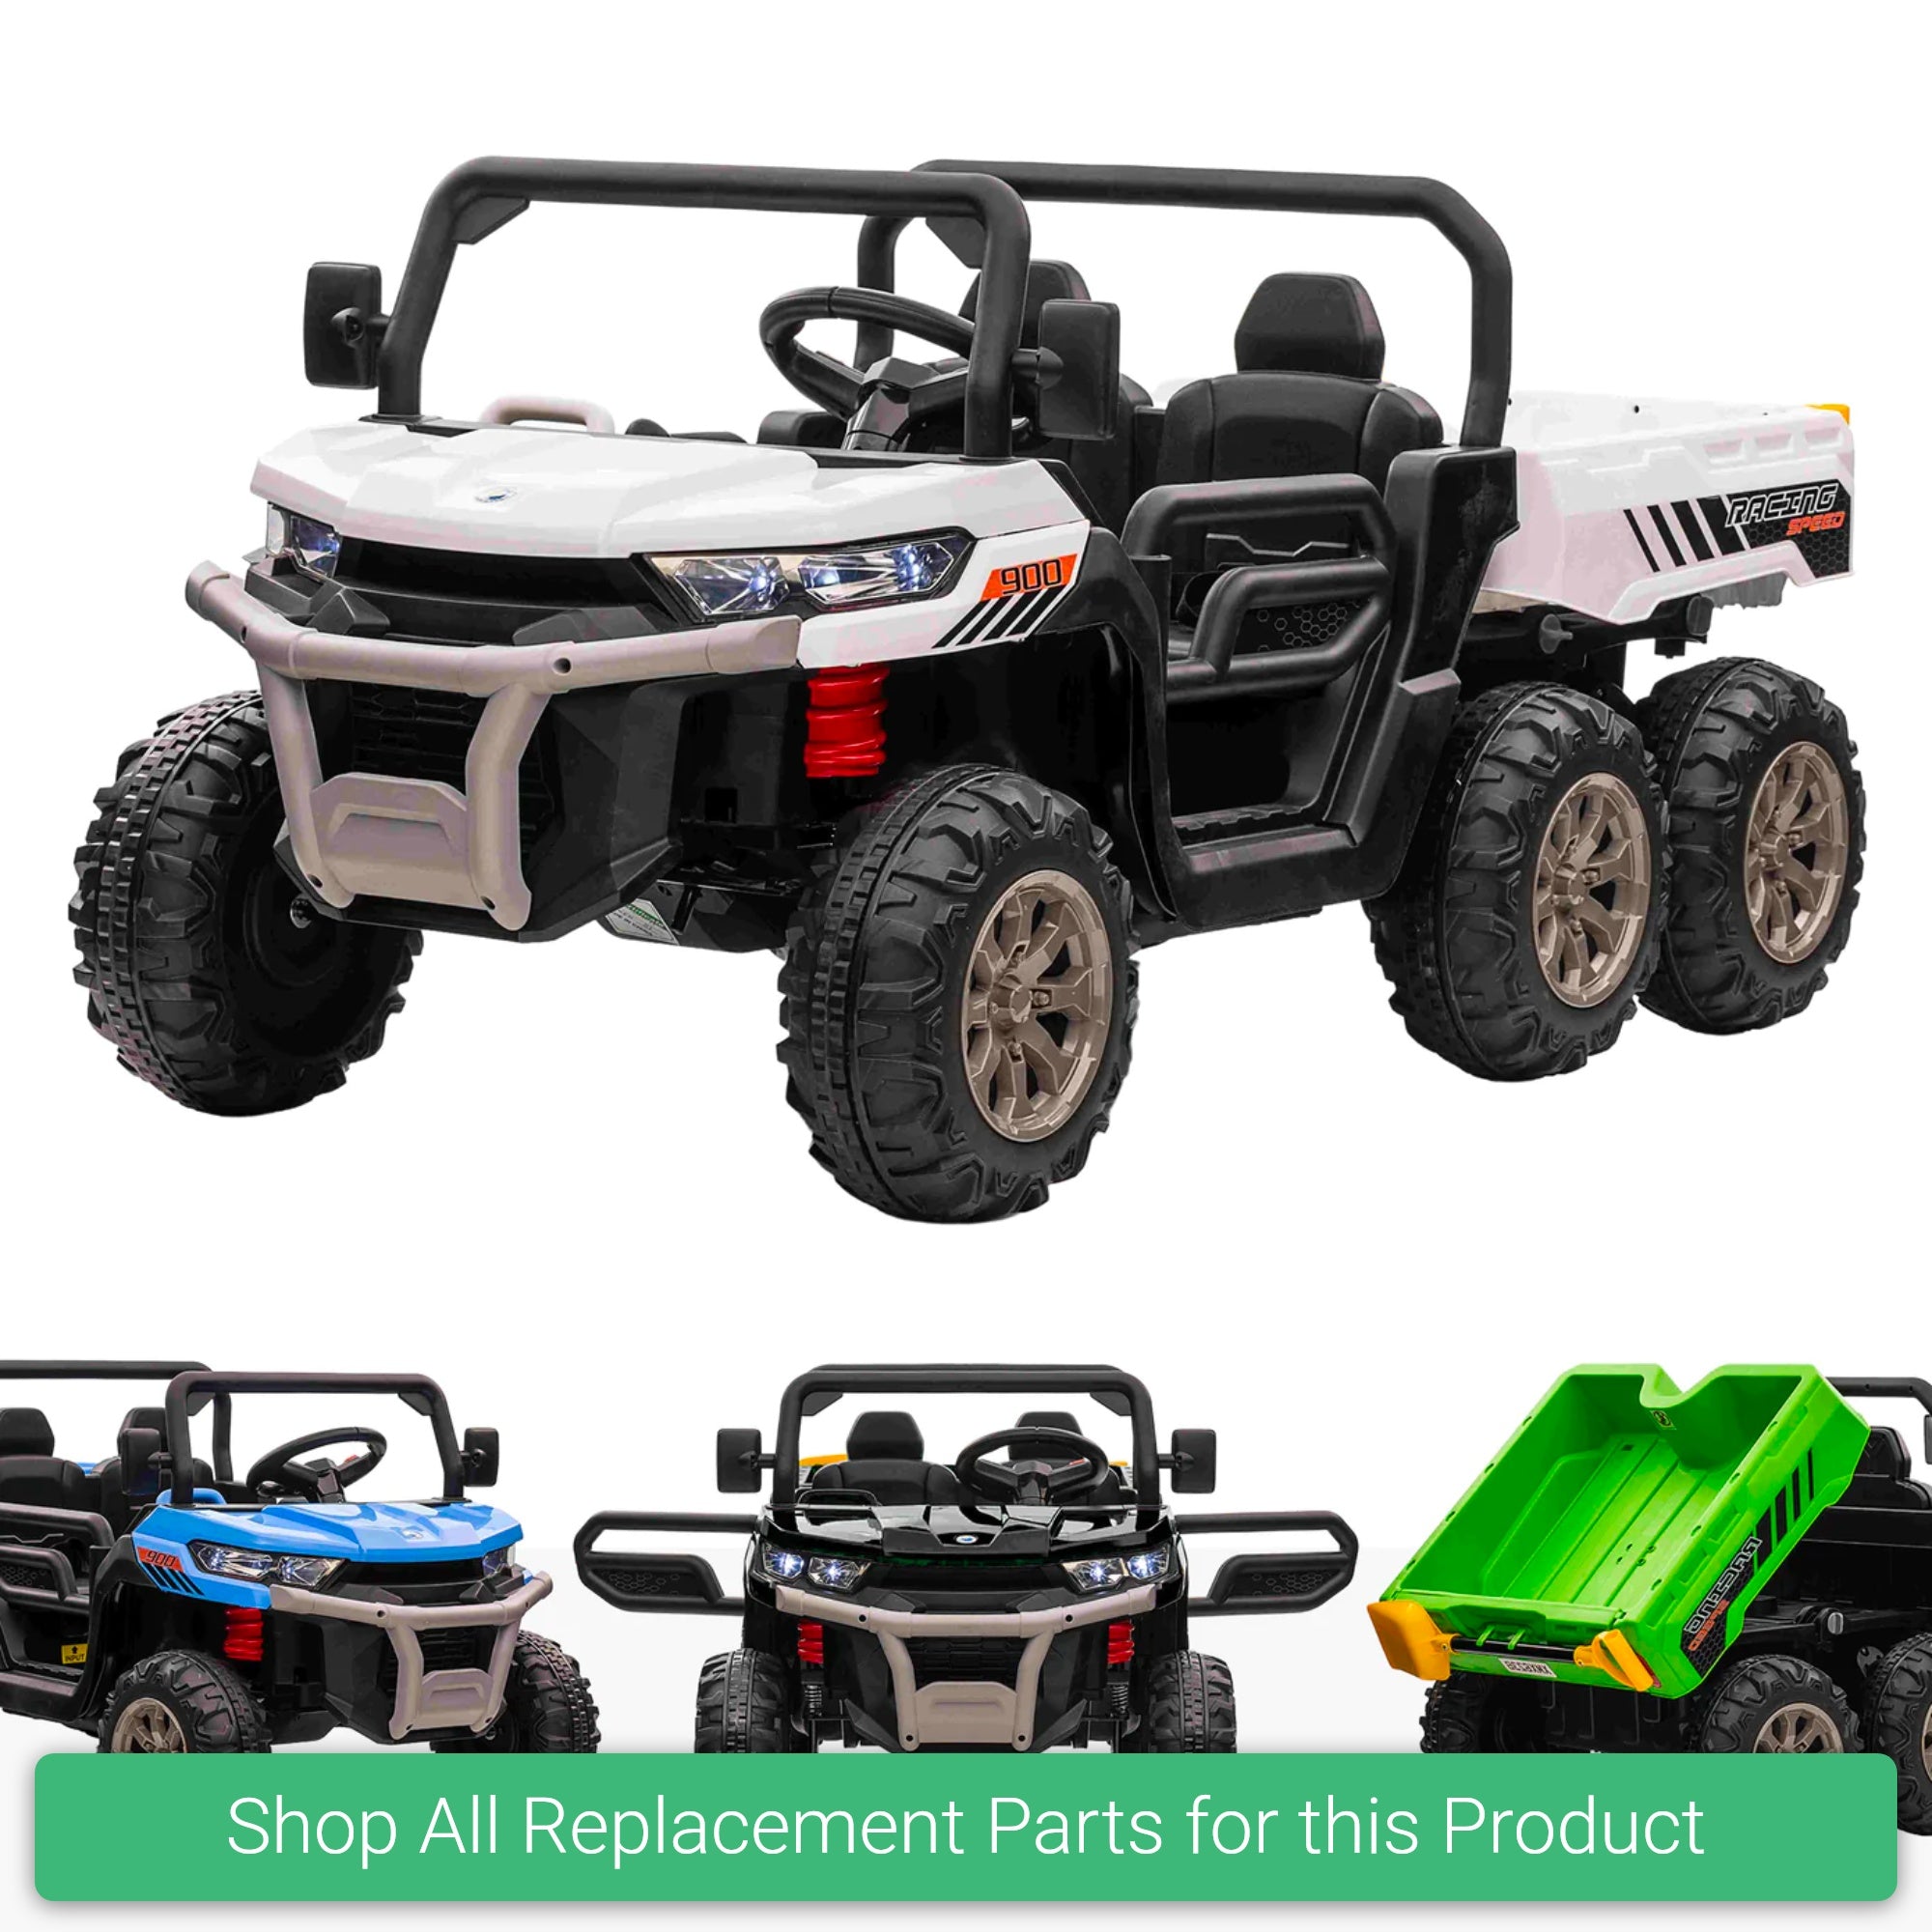 Replacement Parts and Spares for Kids Polaris Ranger Style ATV6 - RANGER-ATV6-VARI - XMX623B